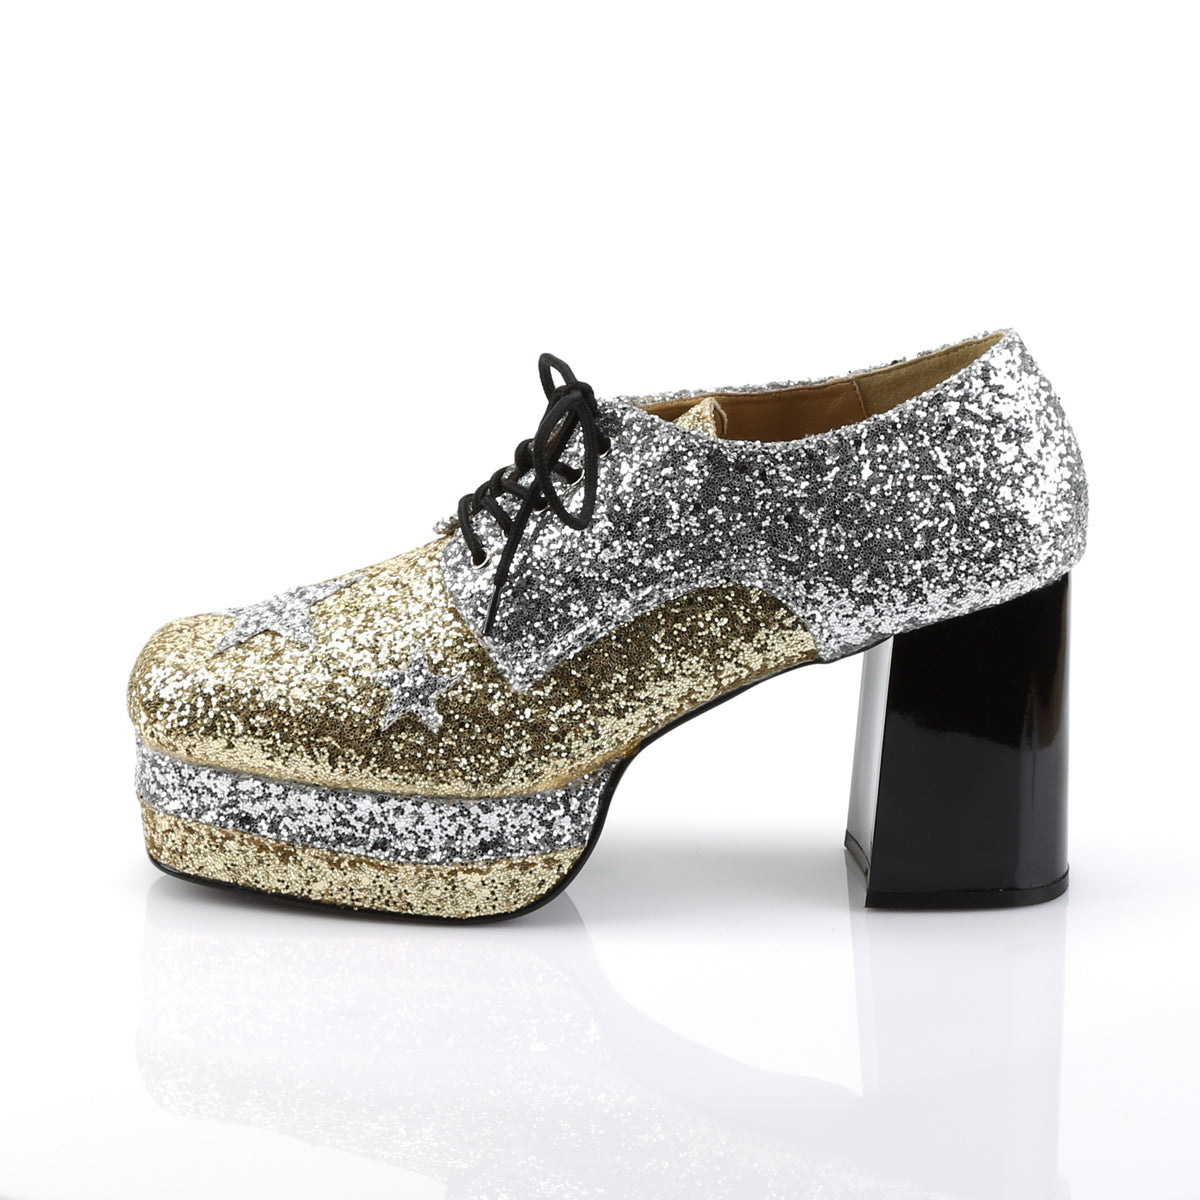 GLAMROCK-02 Fancy Dress Costume Funtasma Men's Shoes Slv-Gold Glitter